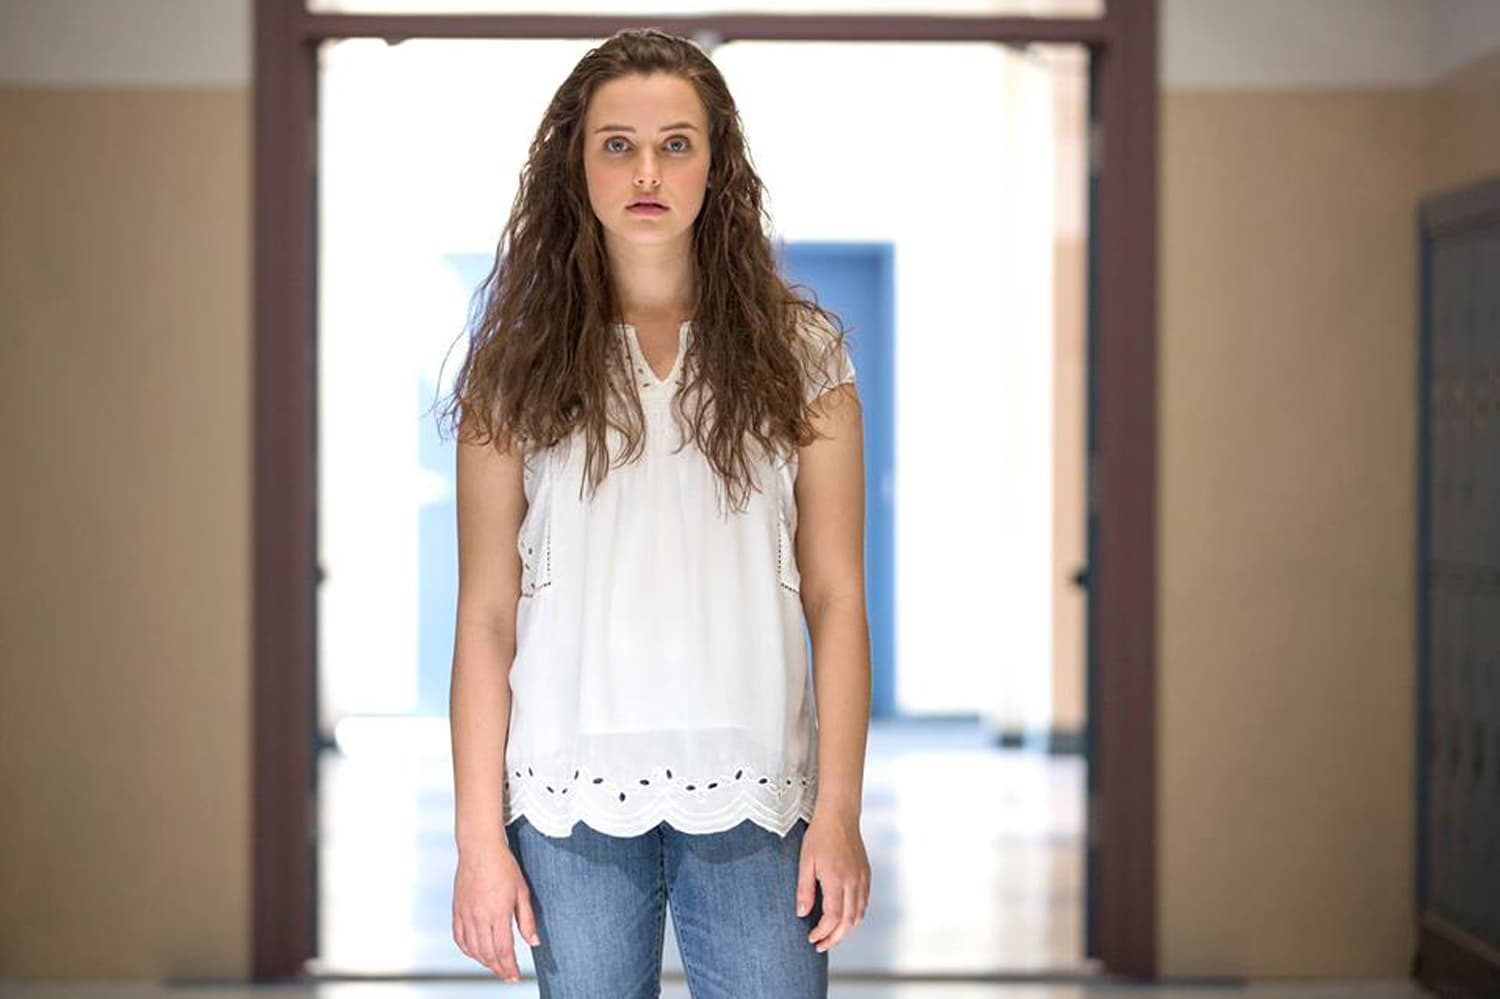 Katherine Langford plays Hannah Baker, a teenage girl, in the Netflix series "13 Reasons Why." (Netflix via Facebook)